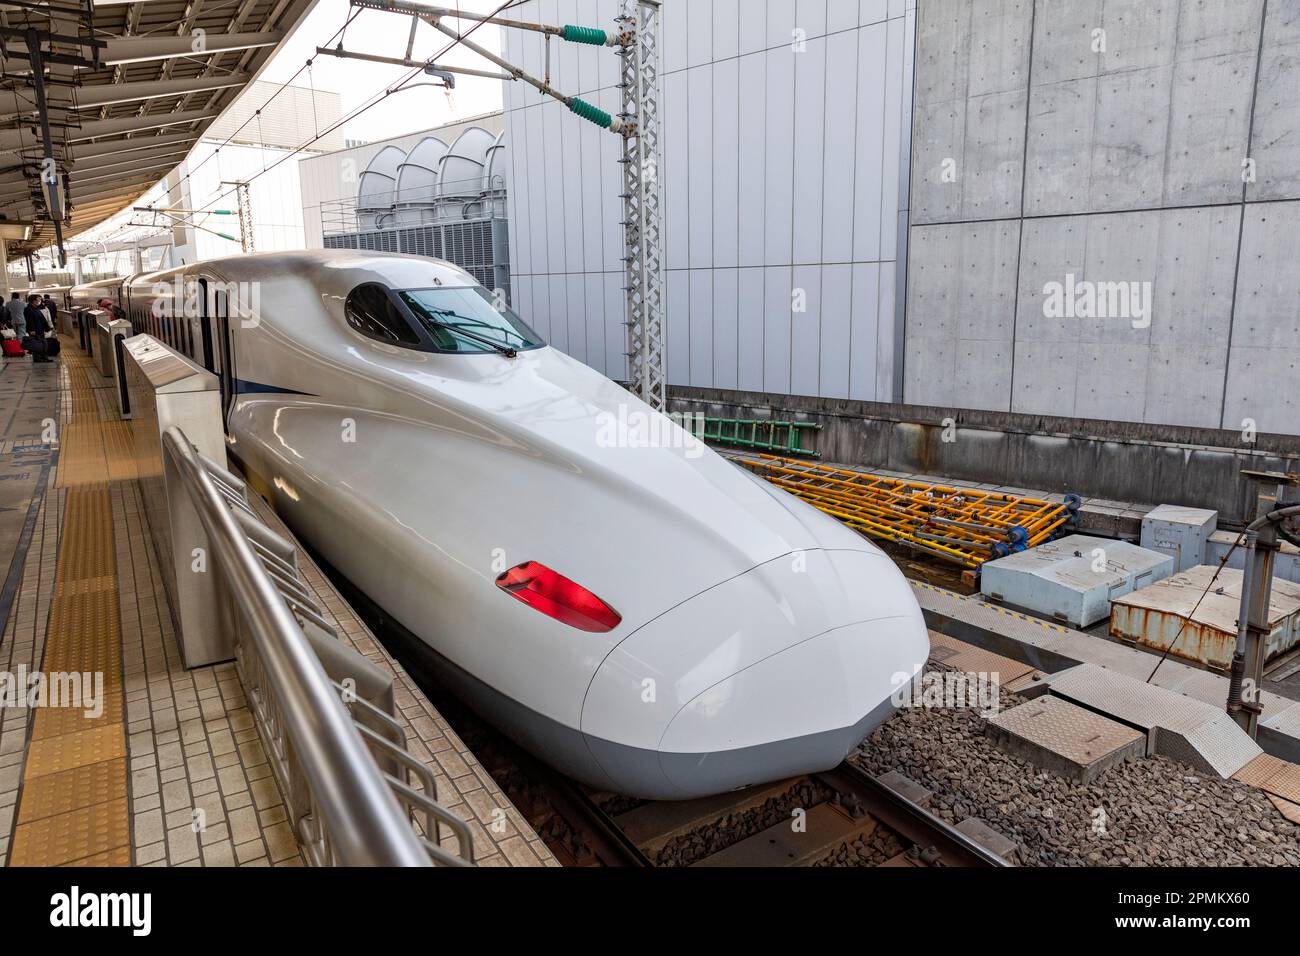 Tokyo station bullet train Shinkansen at the platform ready to depart at high speed, Japanese railway,Asia Stock Photo